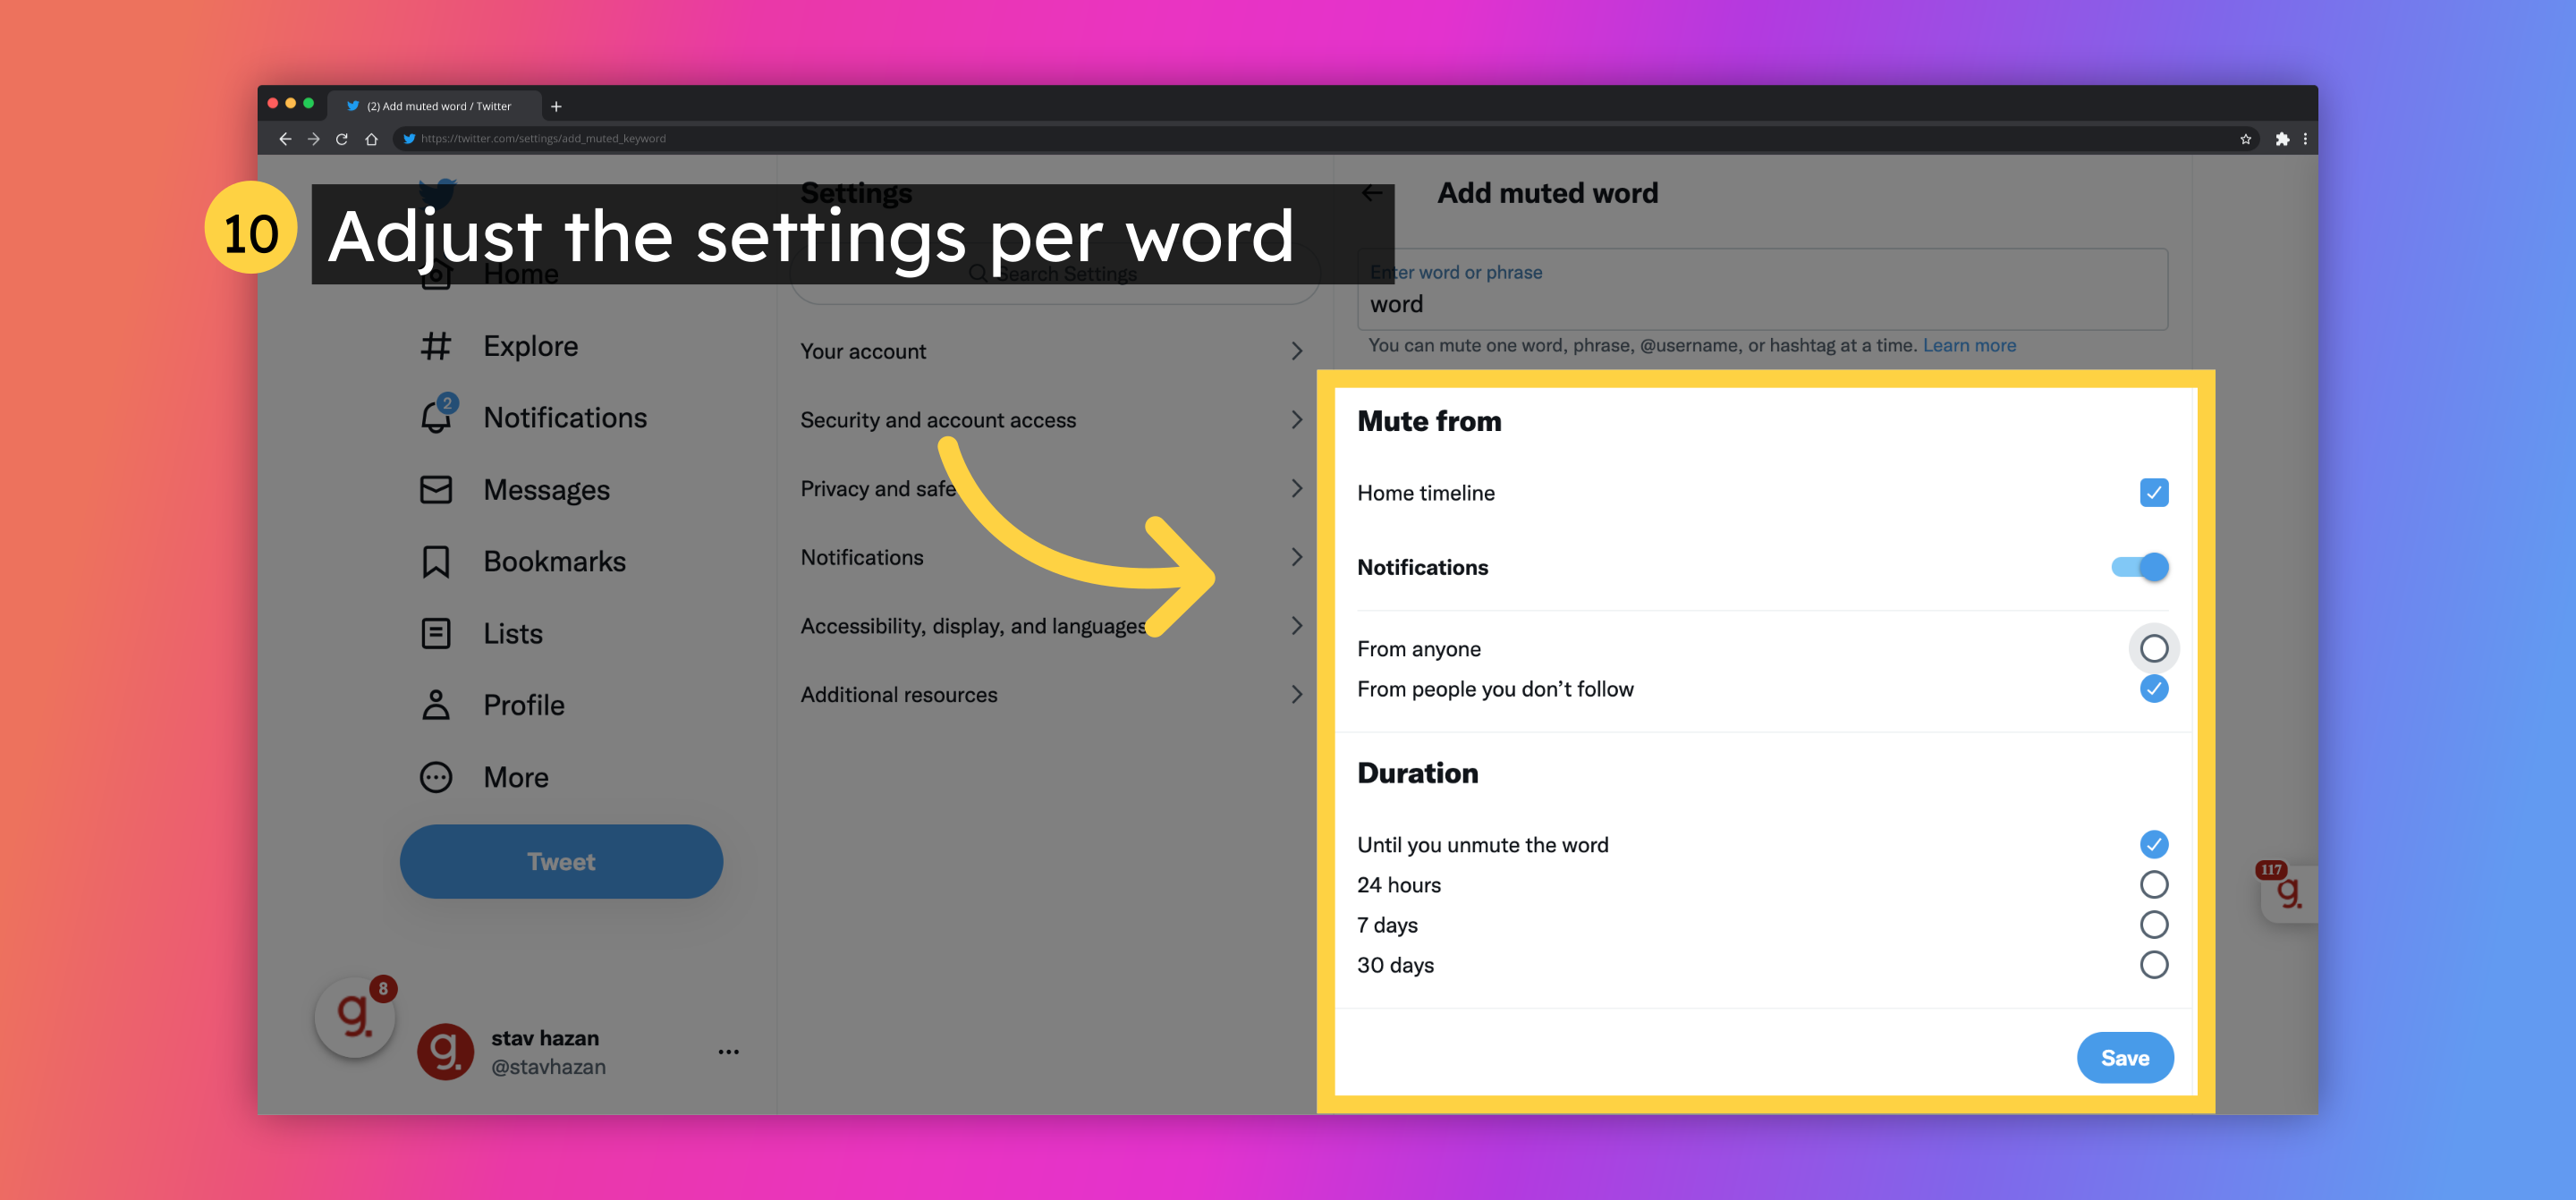 Adjust the settings per word